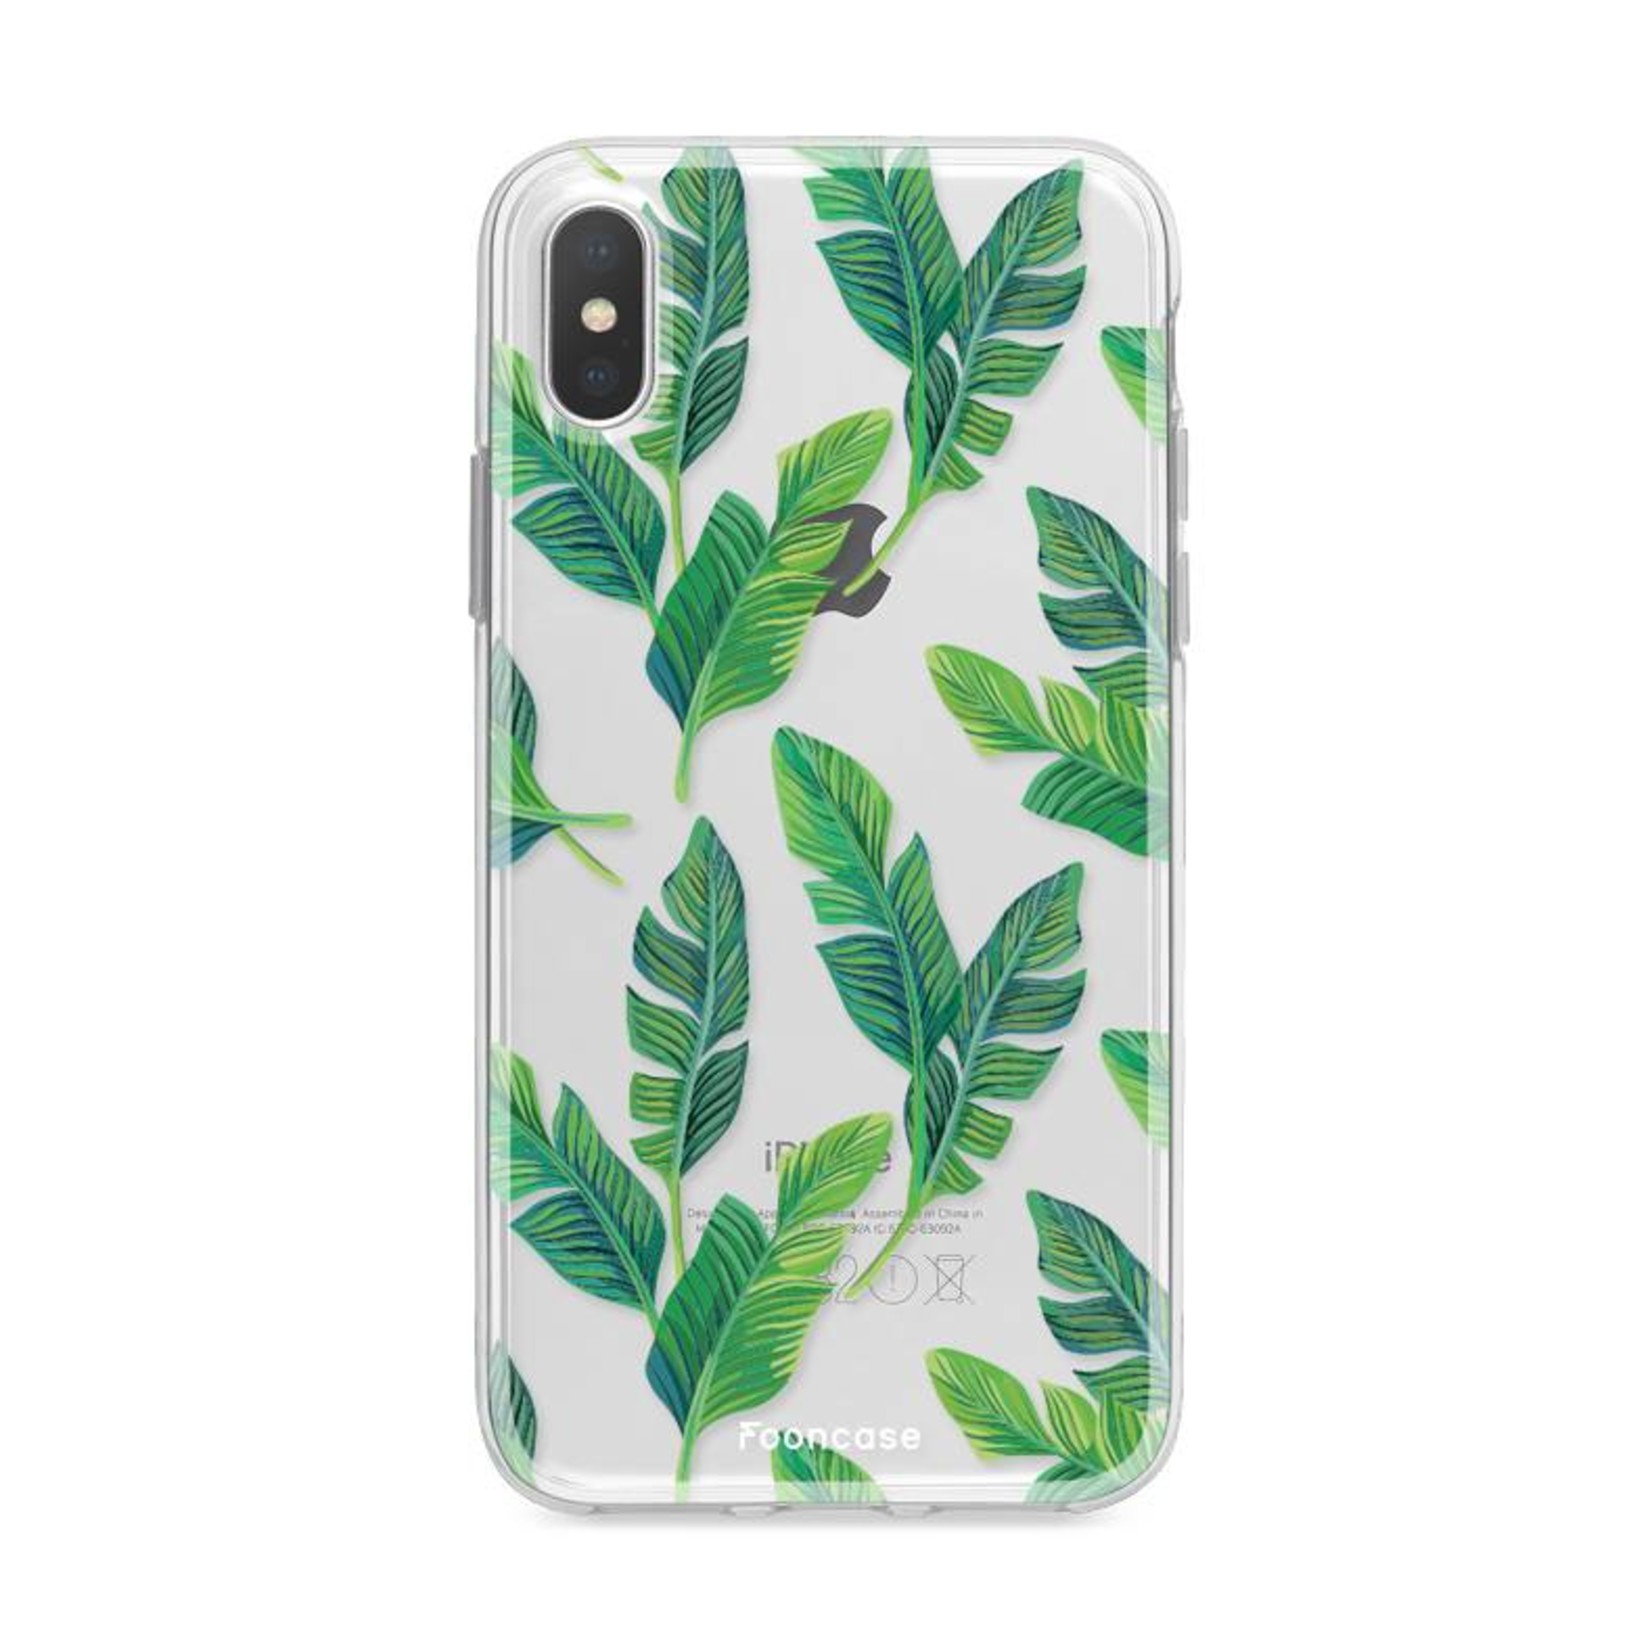 FOONCASE iPhone X hoesje TPU Soft Case - Back Cover - Banana leaves / Bananen bladeren